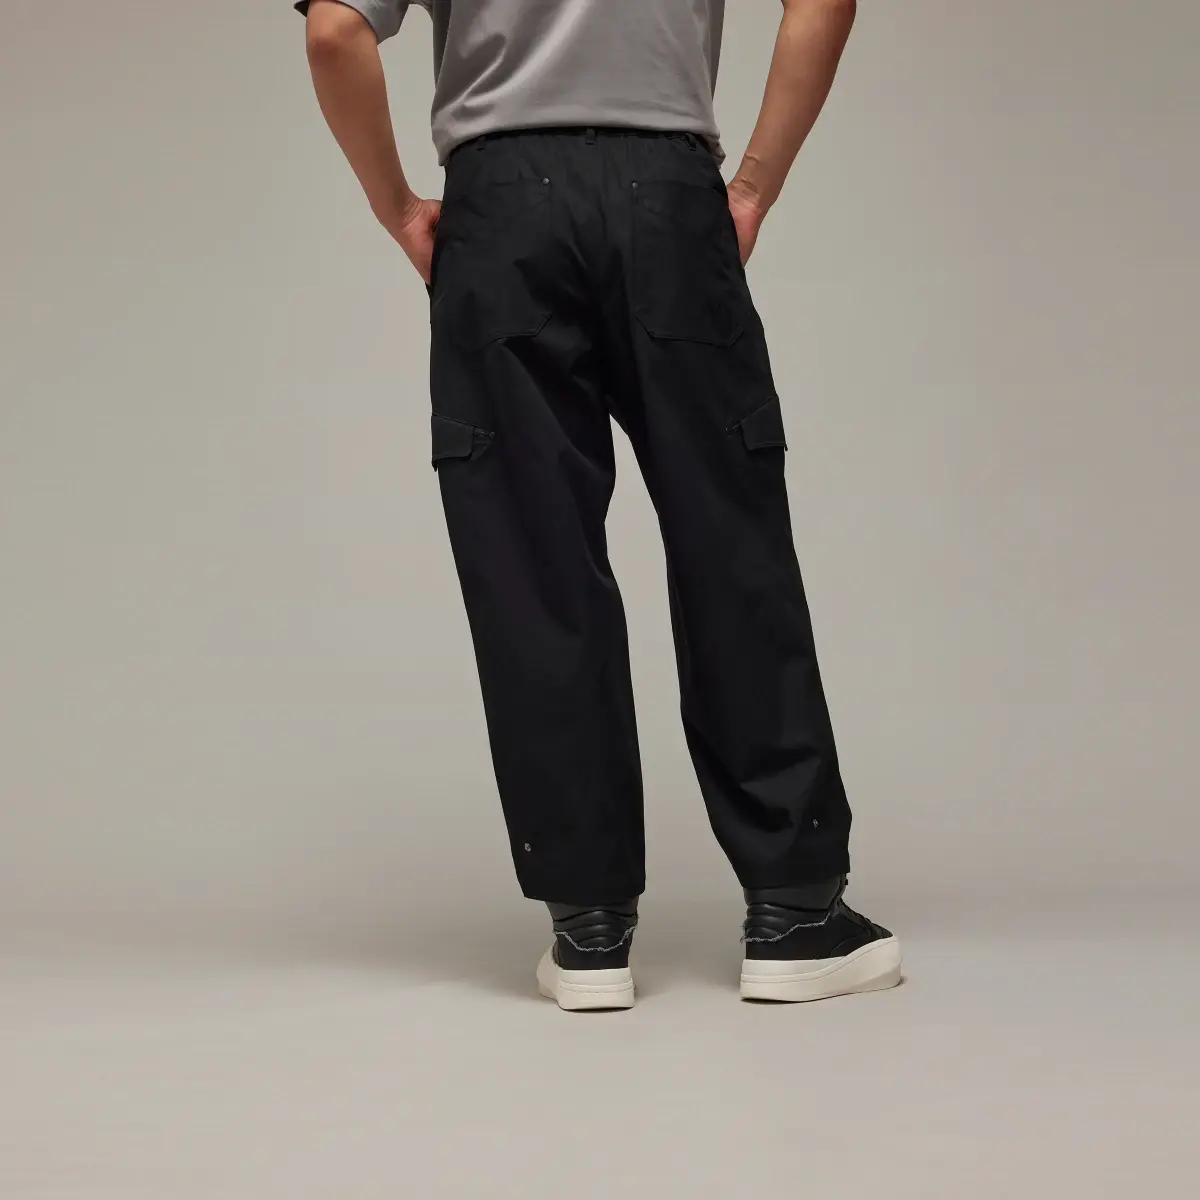 Adidas Y-3 Workwear Cargo Pants. 3